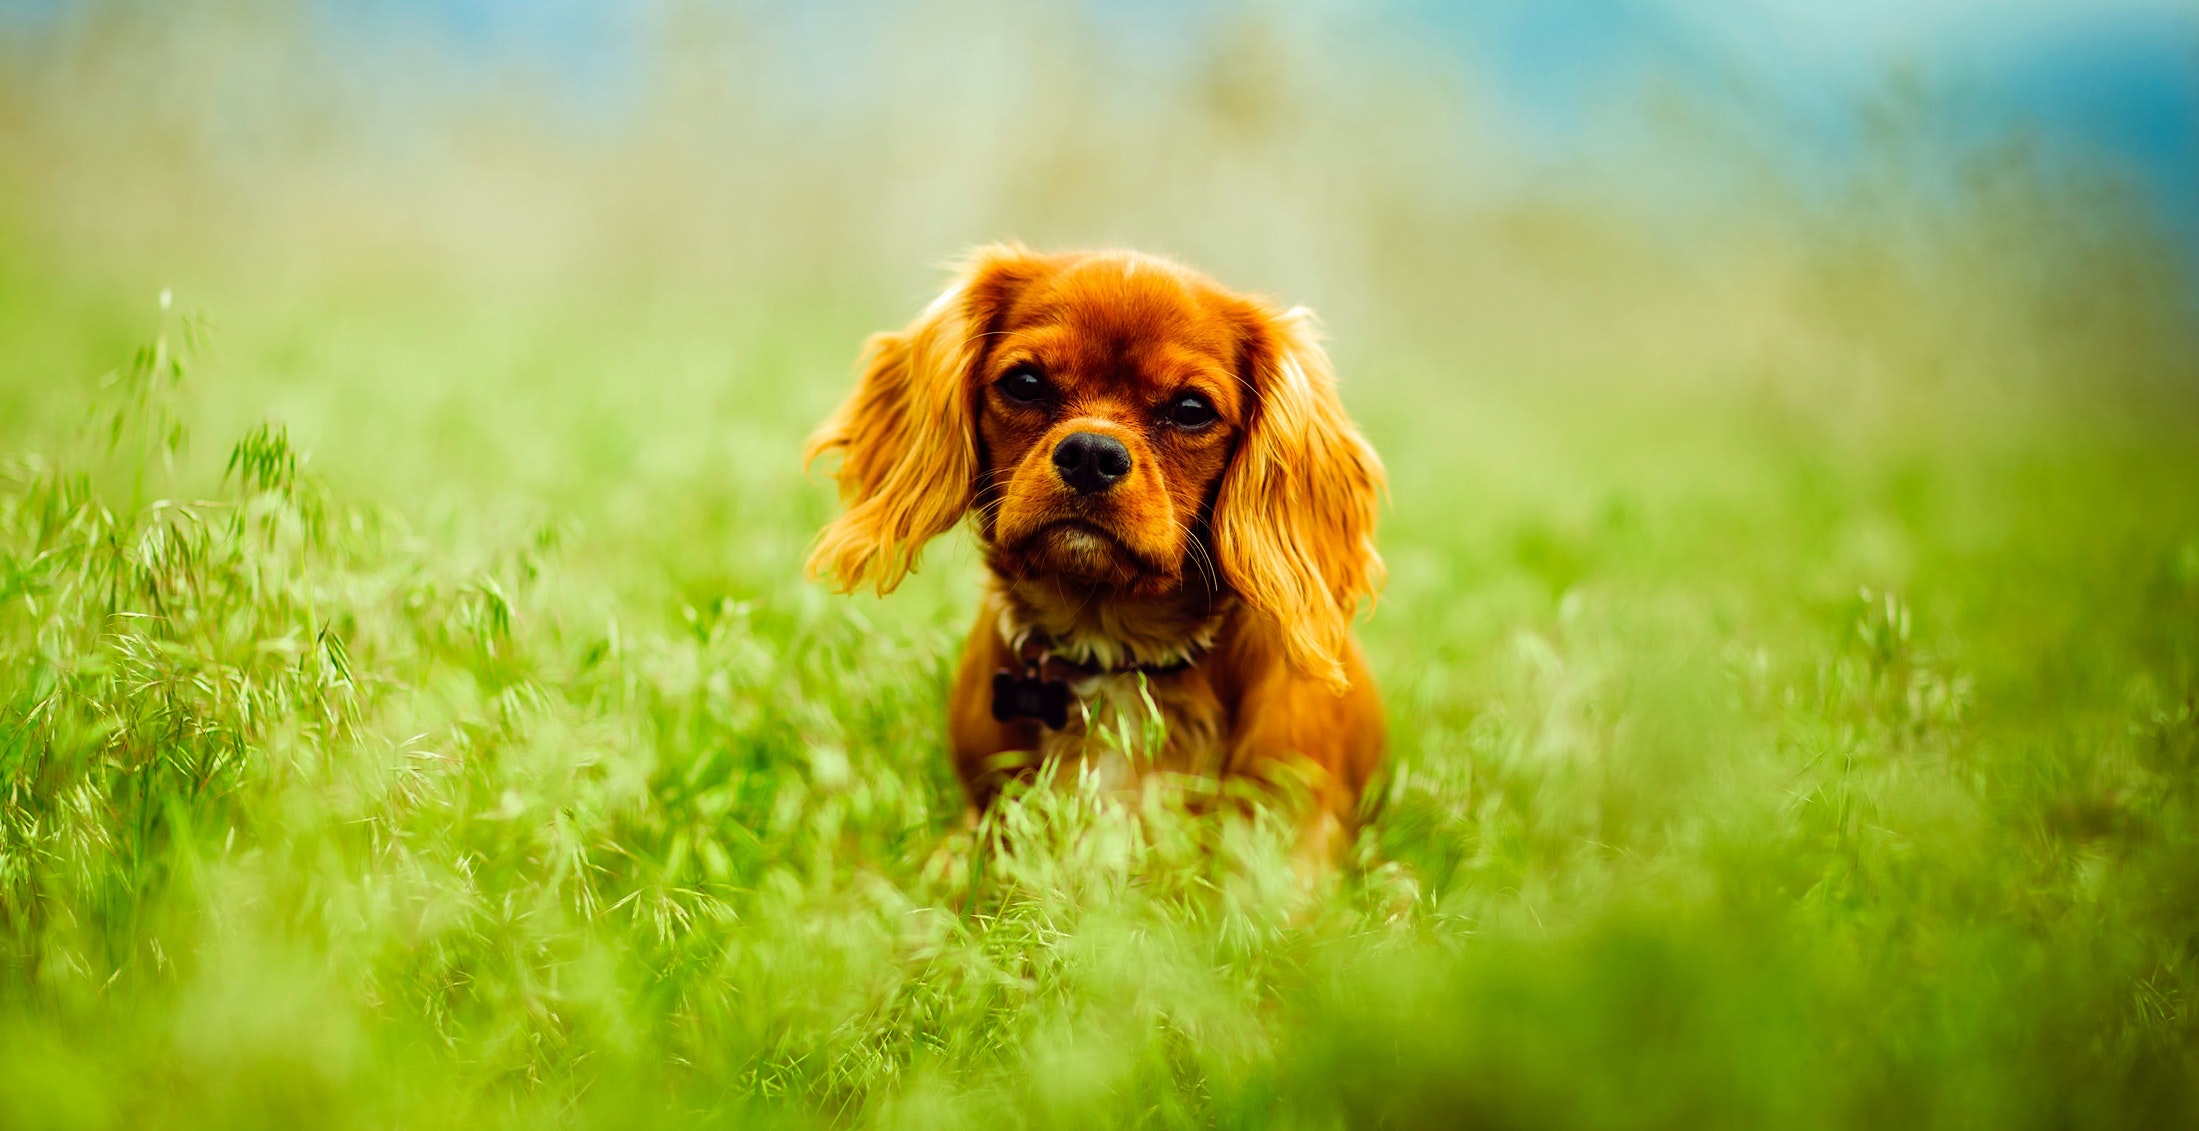 Dog on grass photo